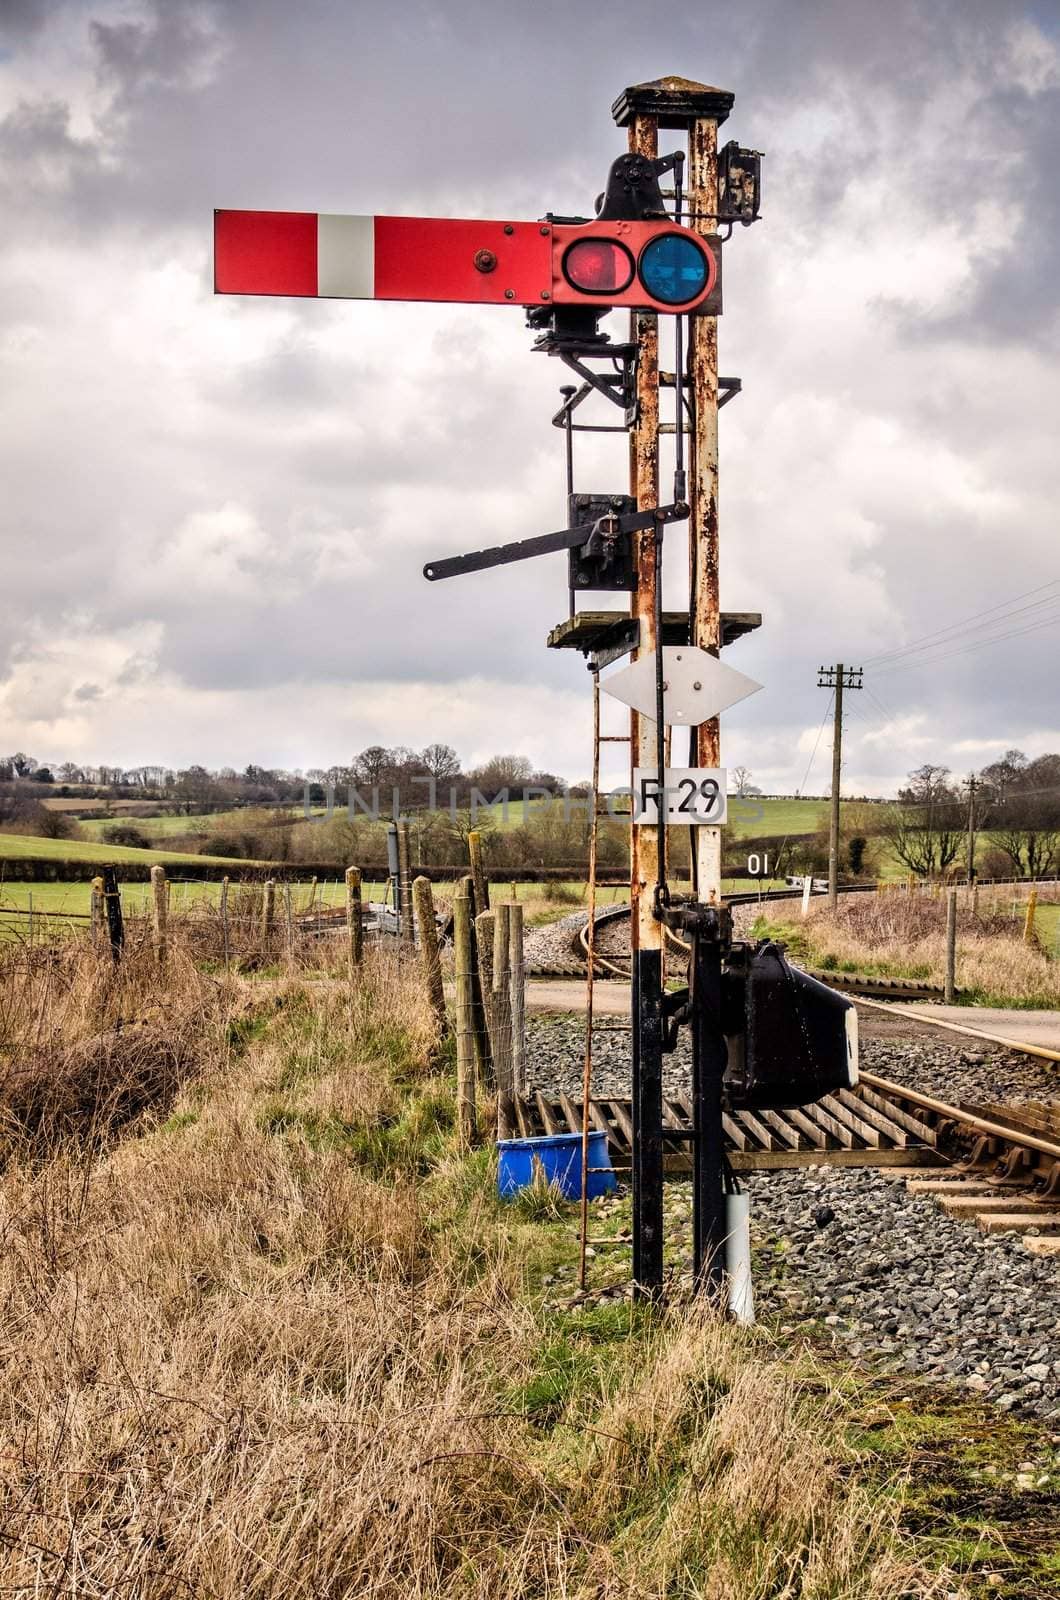 Old style railway signal